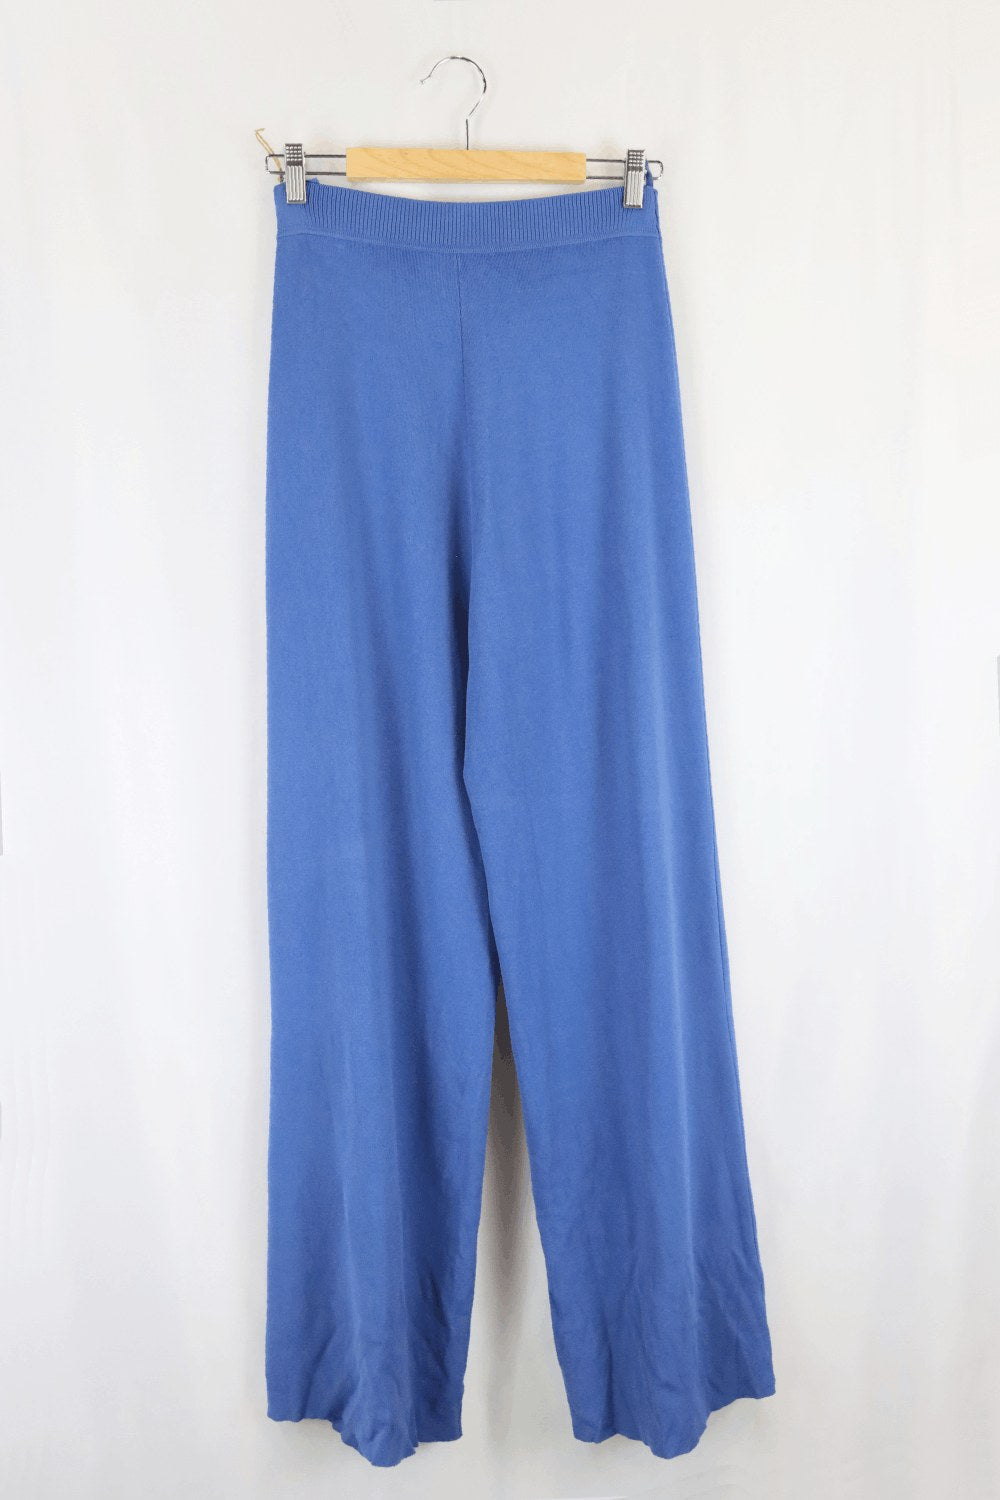 Scanlan Theodore Blue Knit Pants S